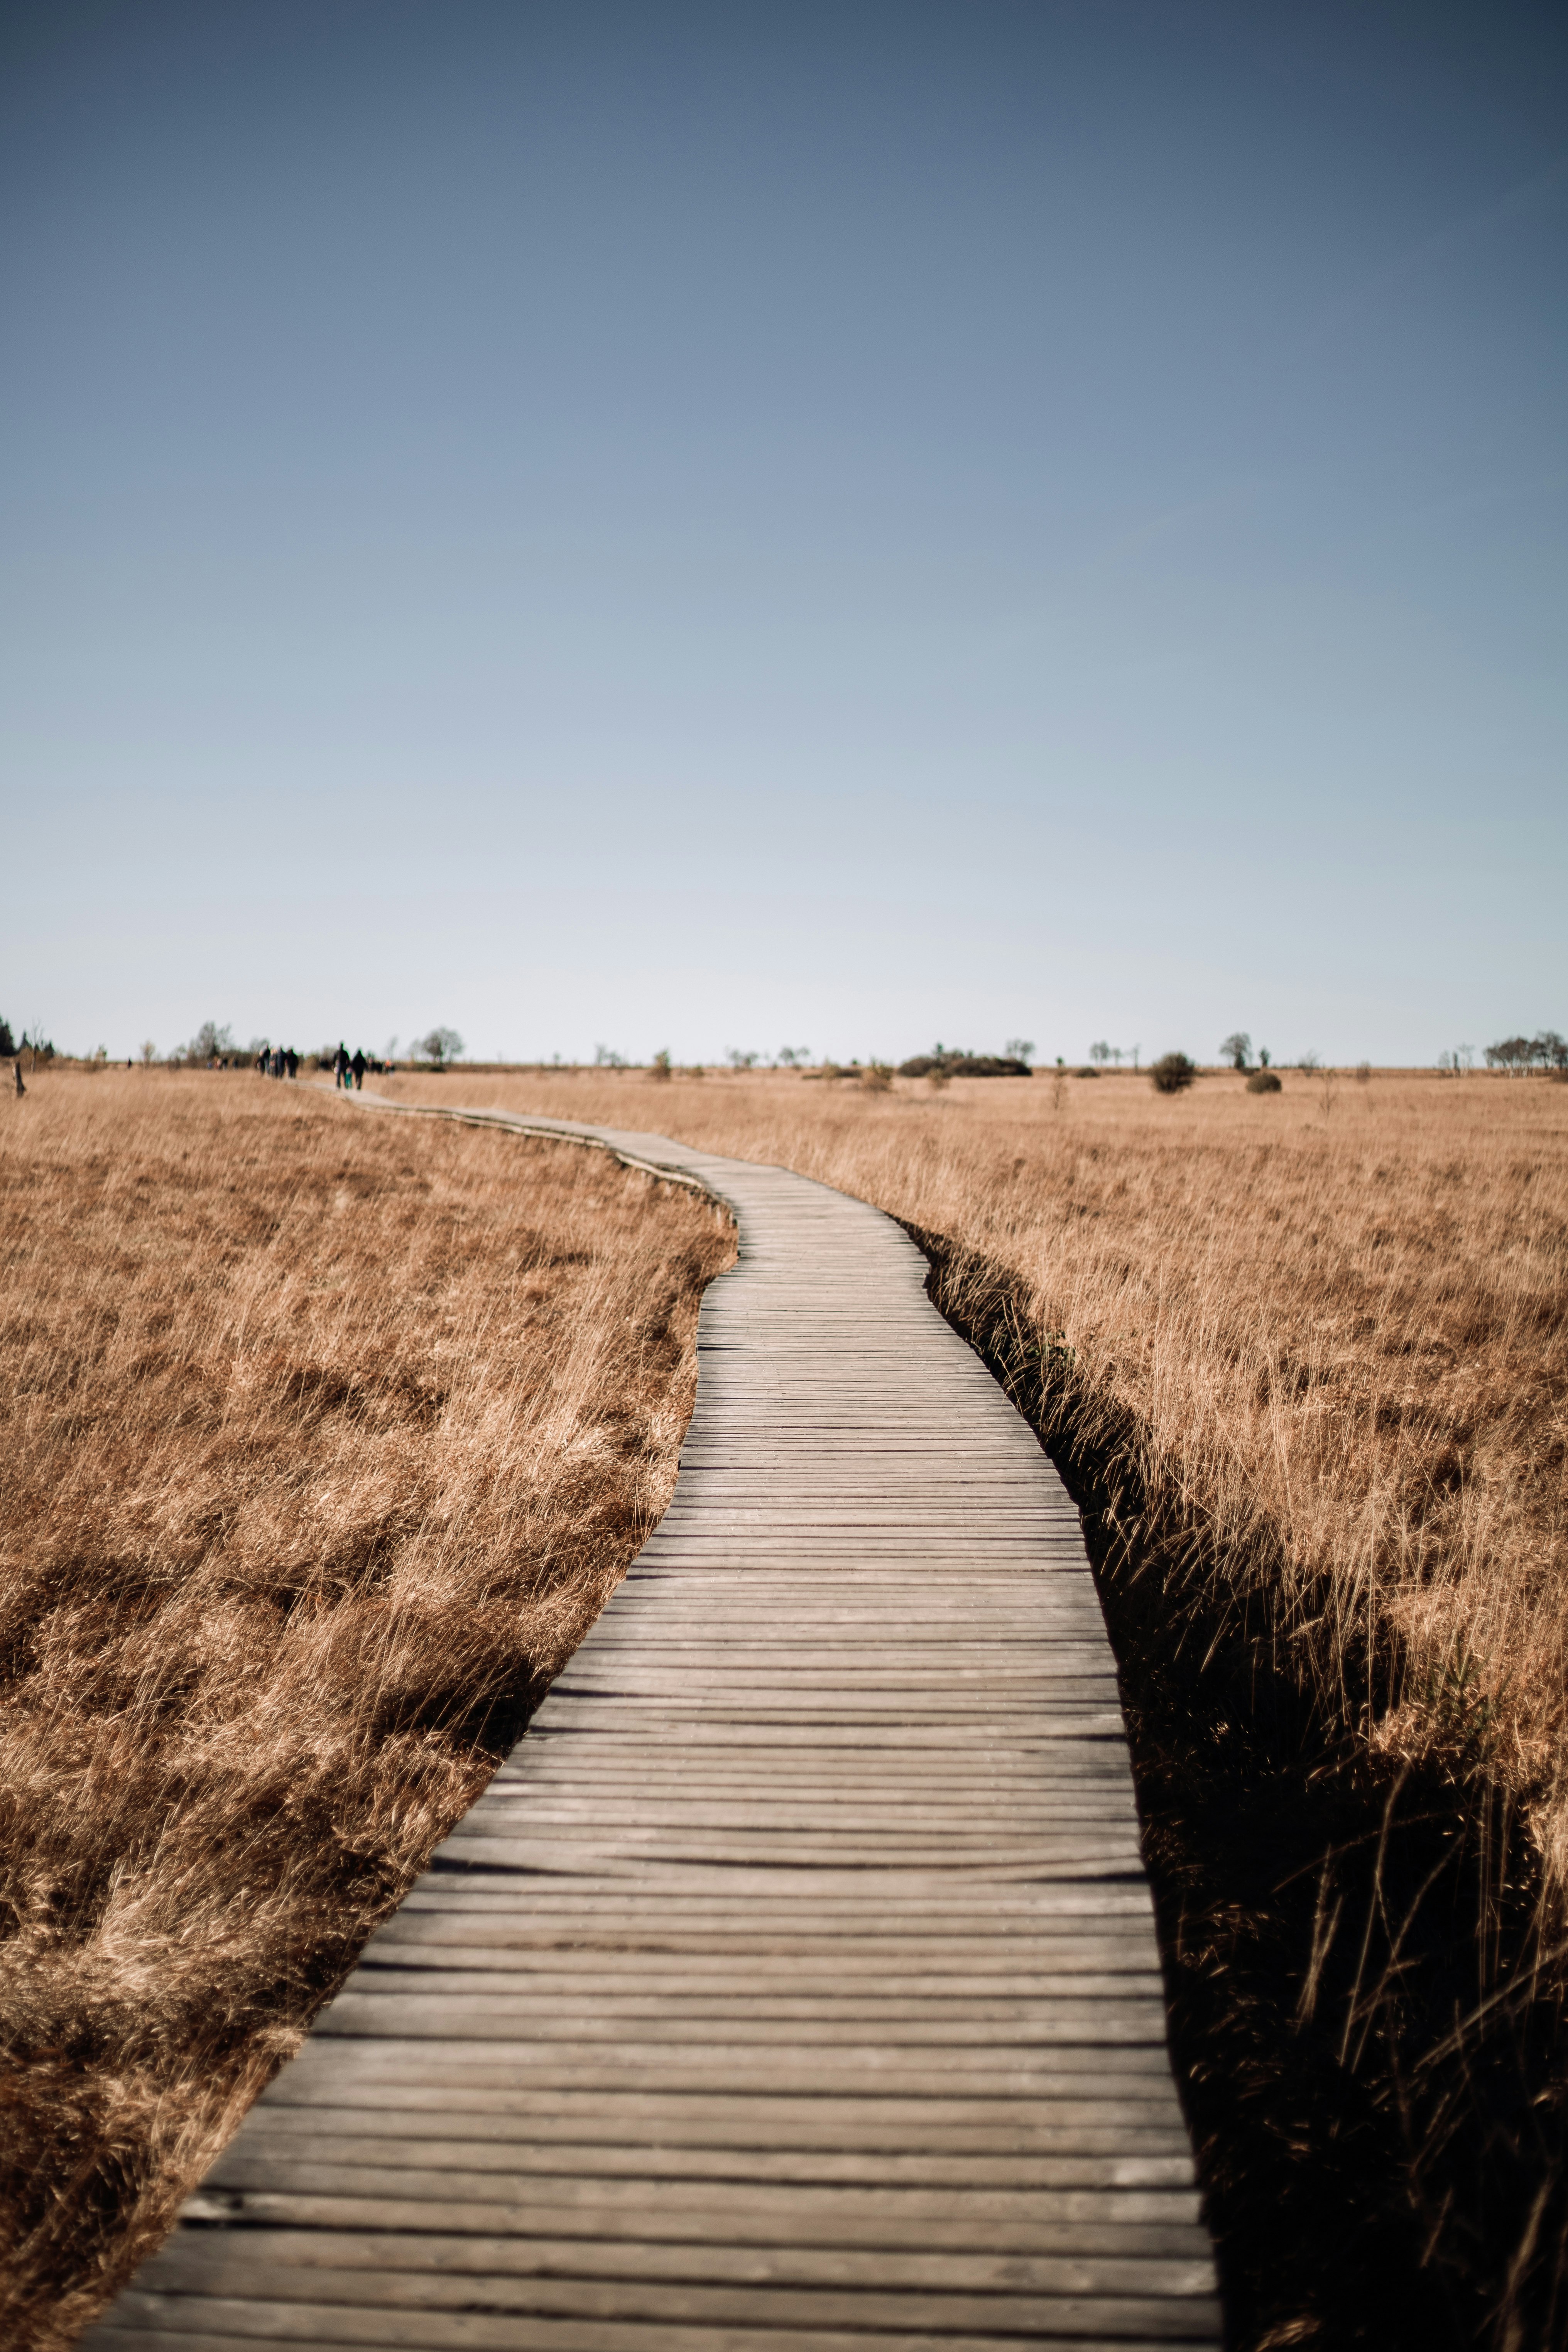 brown wooden pathway in between brown grass field during daytime